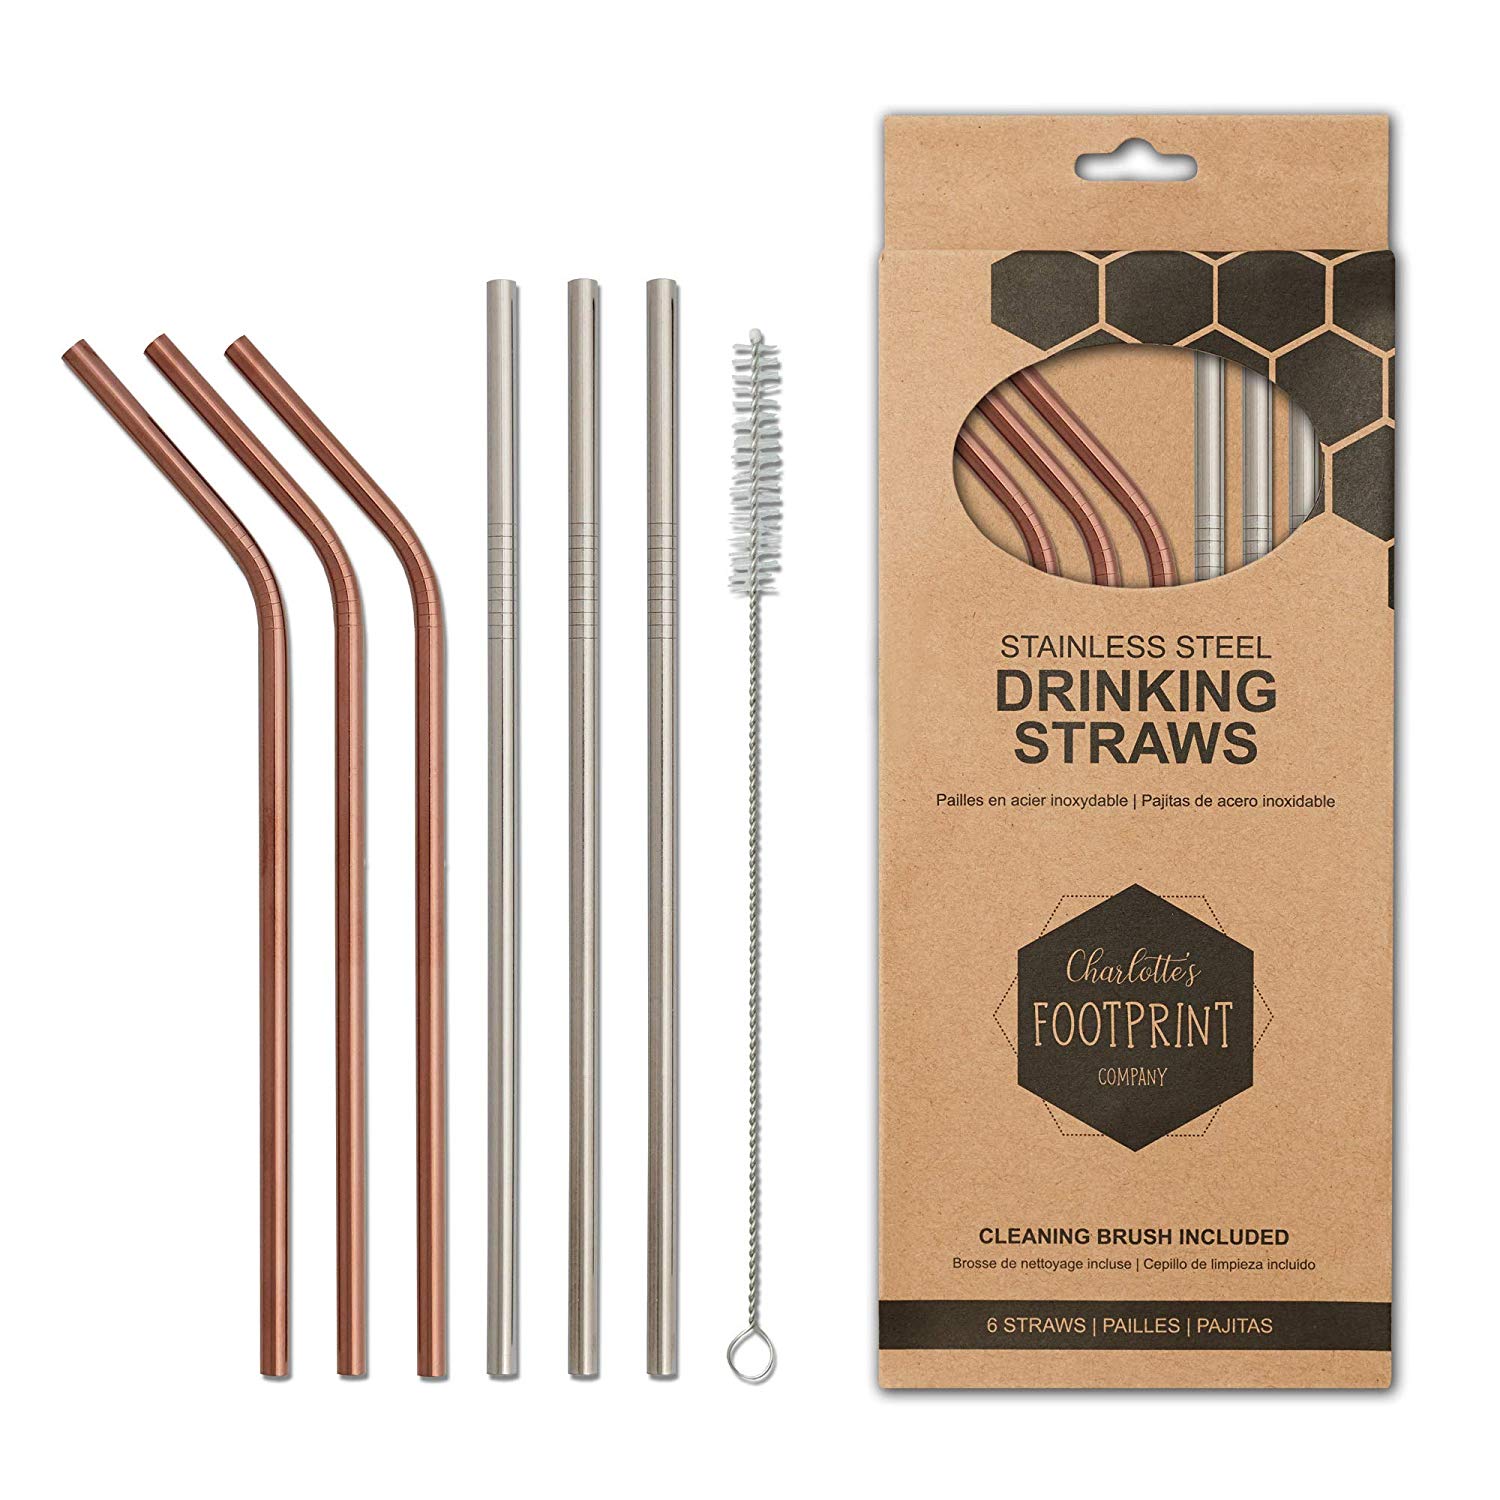 2440 - Stainless Steel Drinking Straws